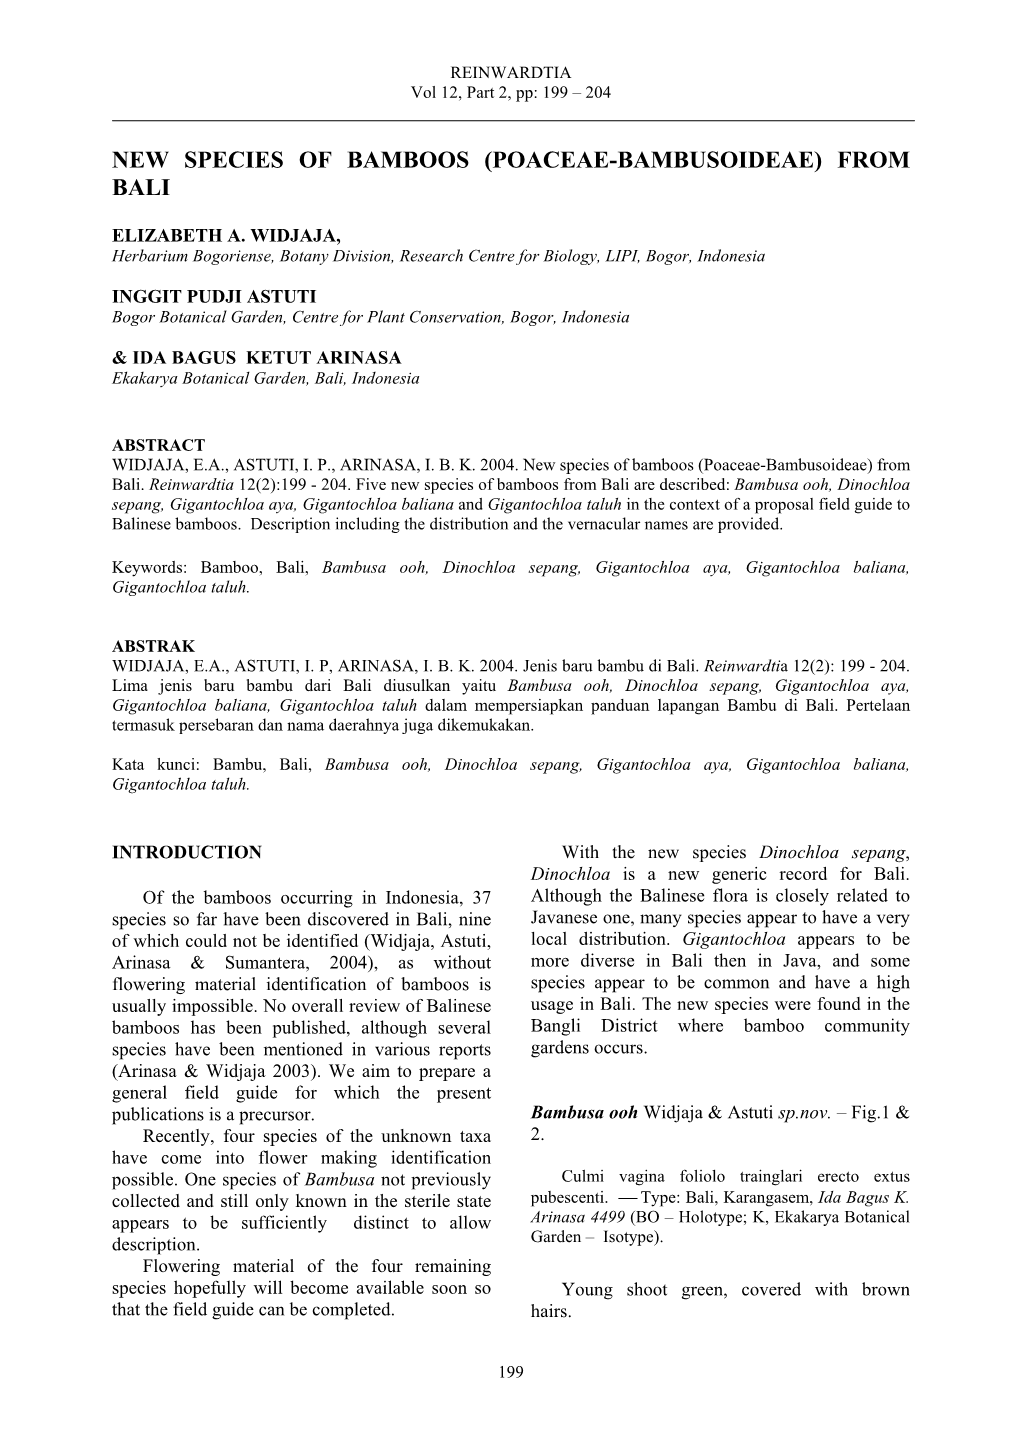 Gigantochloa Aya, Gigantochloa Baliana and Gigantochloa Taluh in the Context of a Proposal Field Guide to Balinese Bamboos